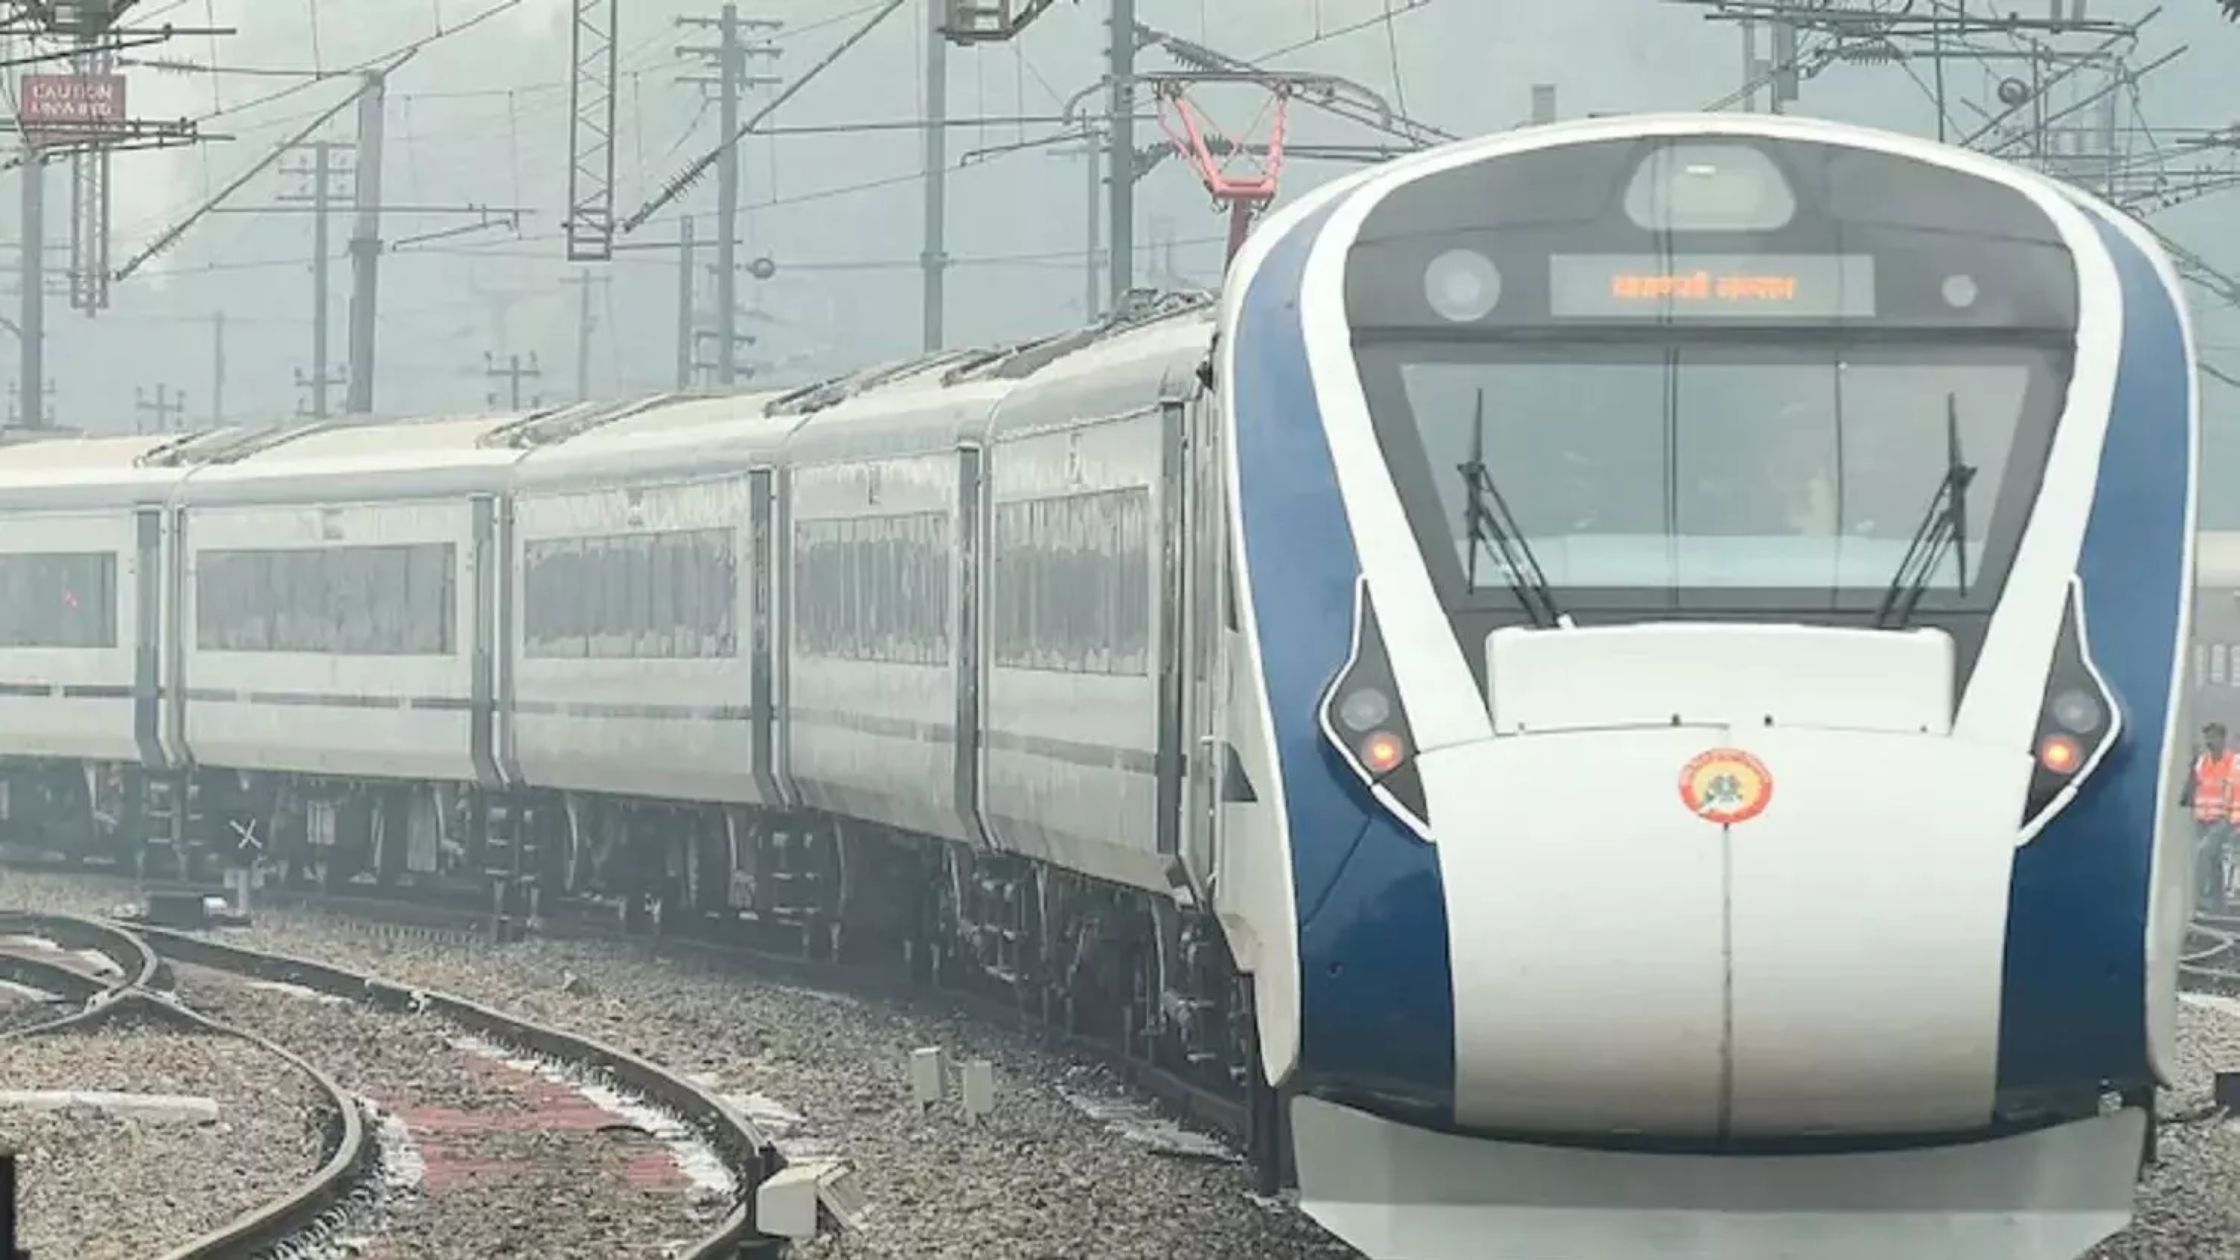 2 Vande Bharat Express will start operating soon in Bihar